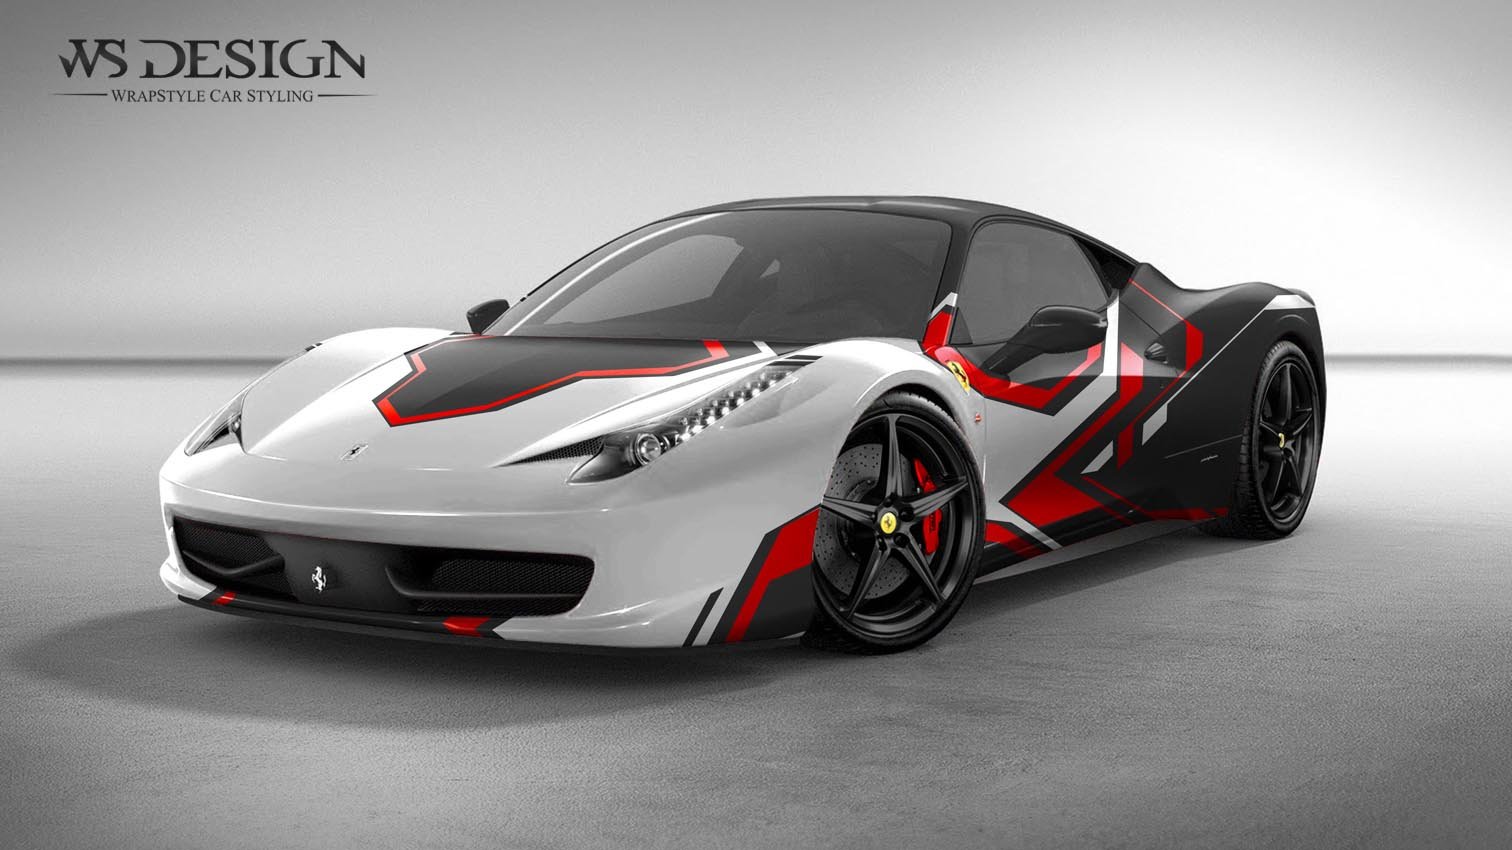 Tropical Ferrari 458 Wrap Design Concept